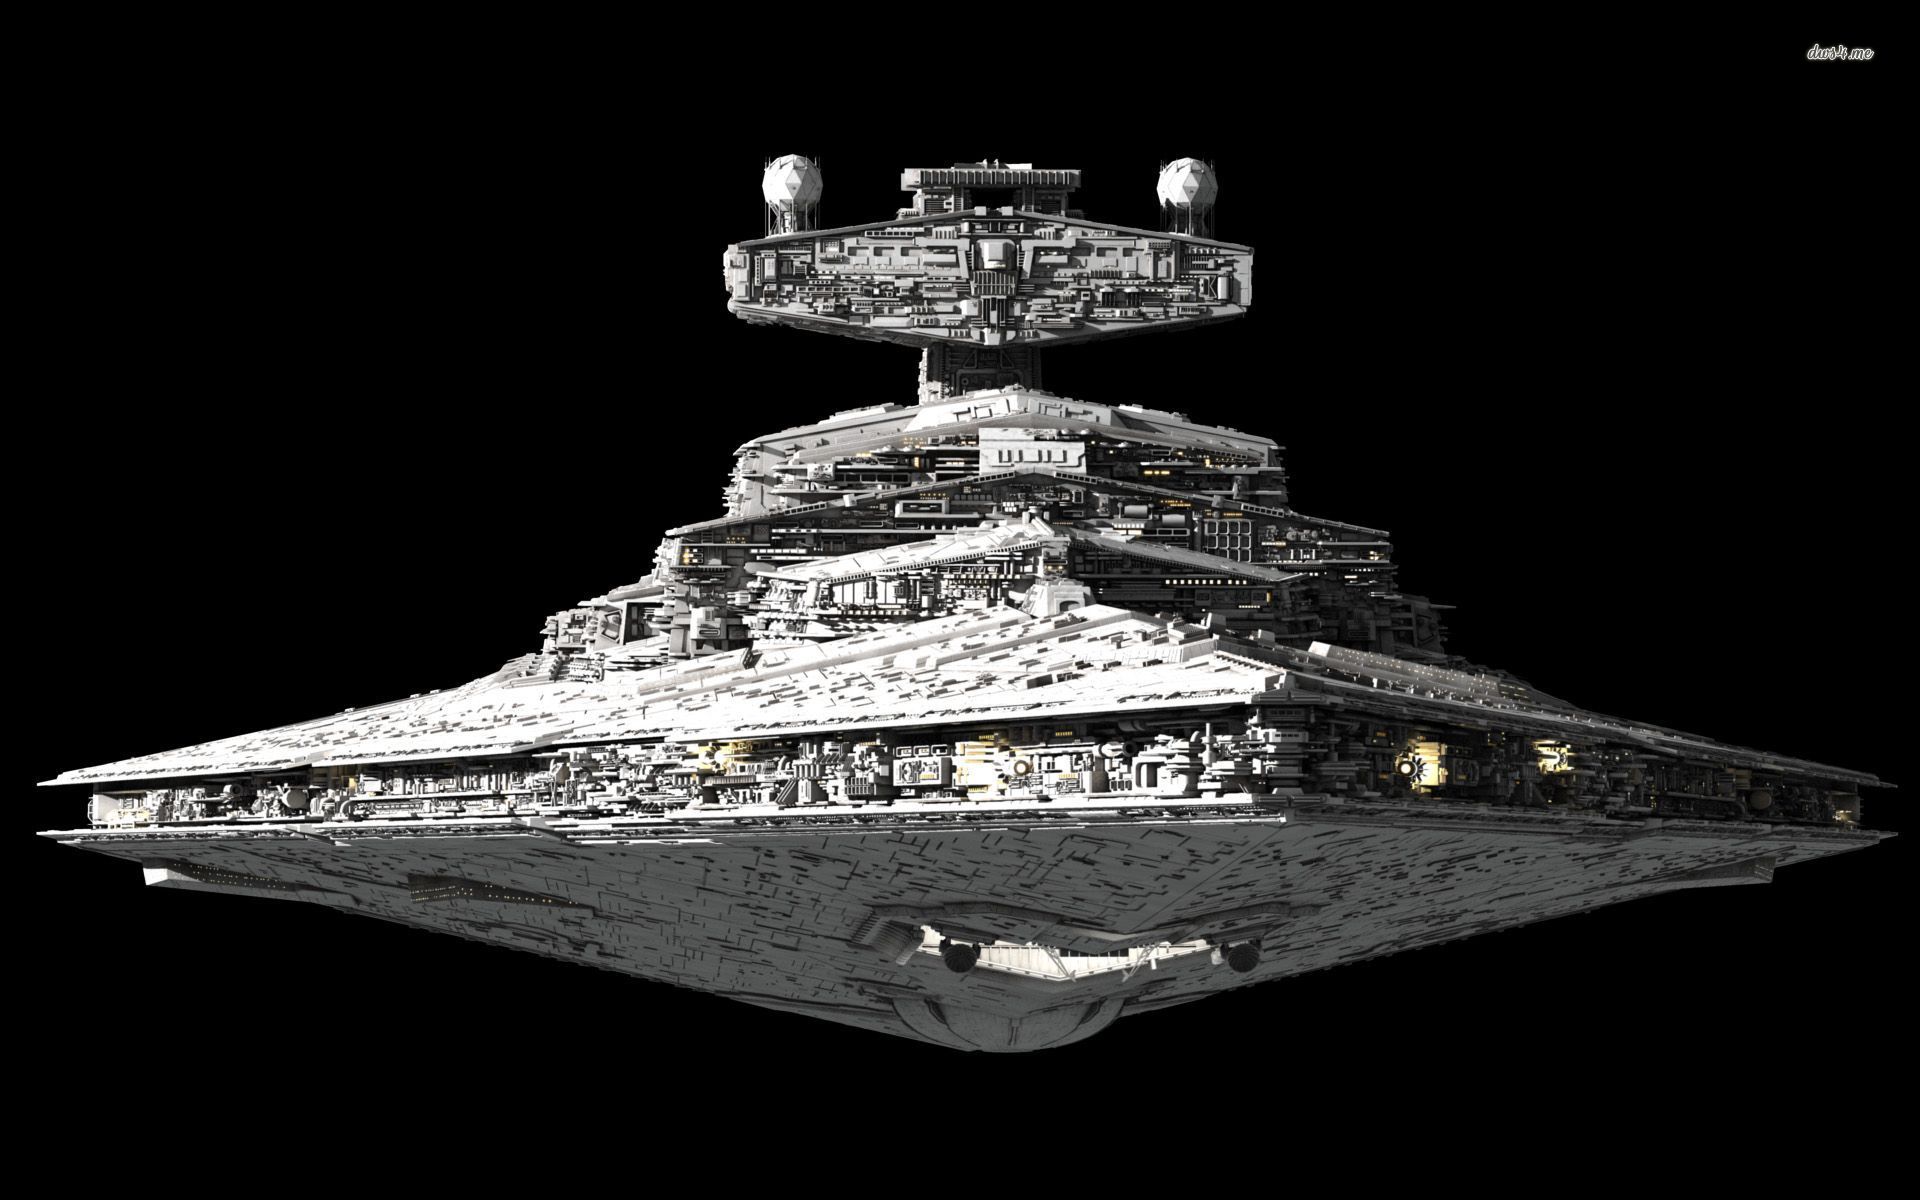 4k rendered wallpaper of an Imperial IIclass Star Destroyer  rStarWars